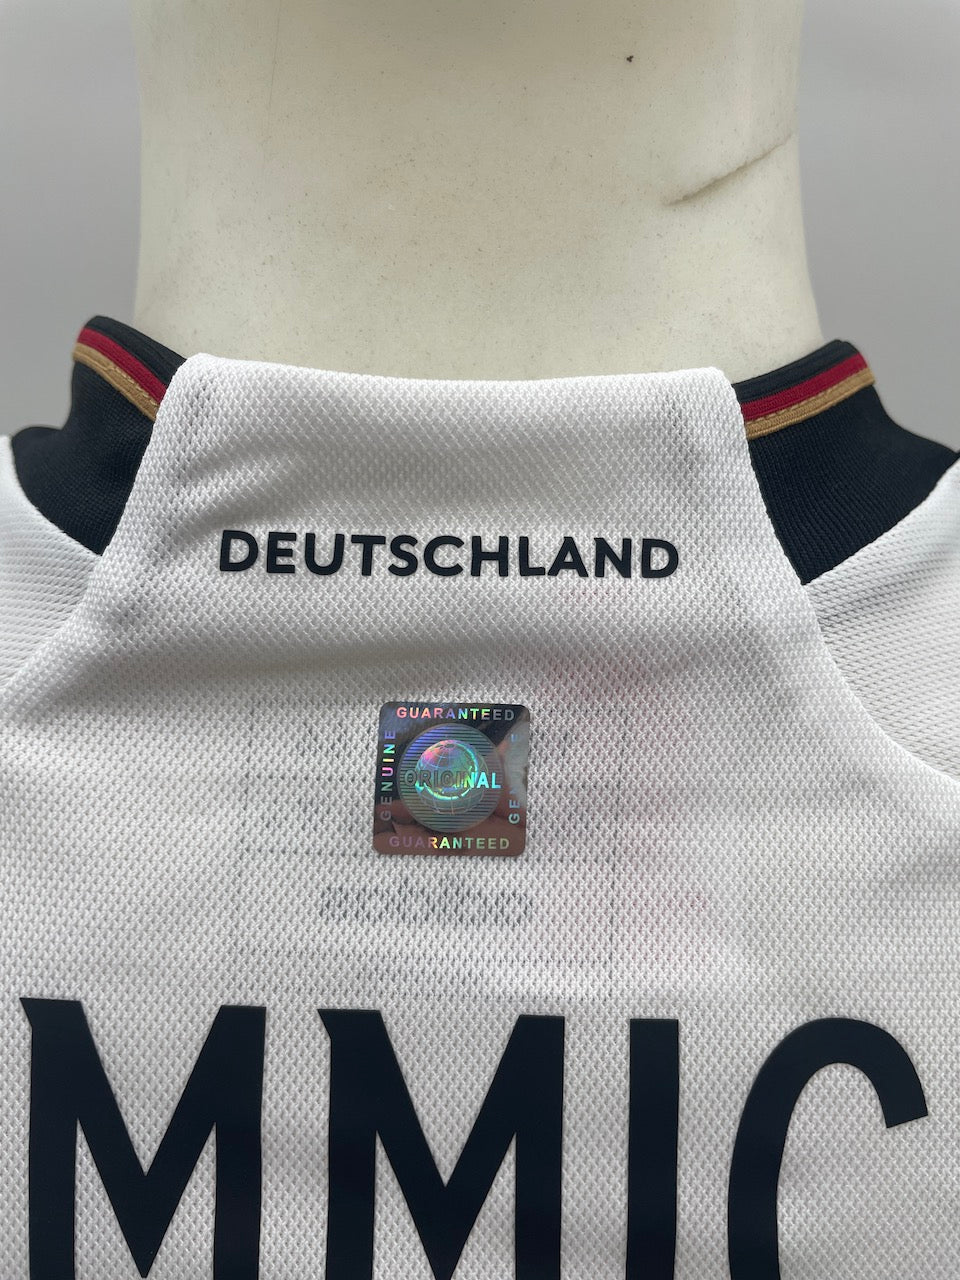 DFB Trikot Joshua Kimmich signiert Adidas COA Deutschland DFB 164